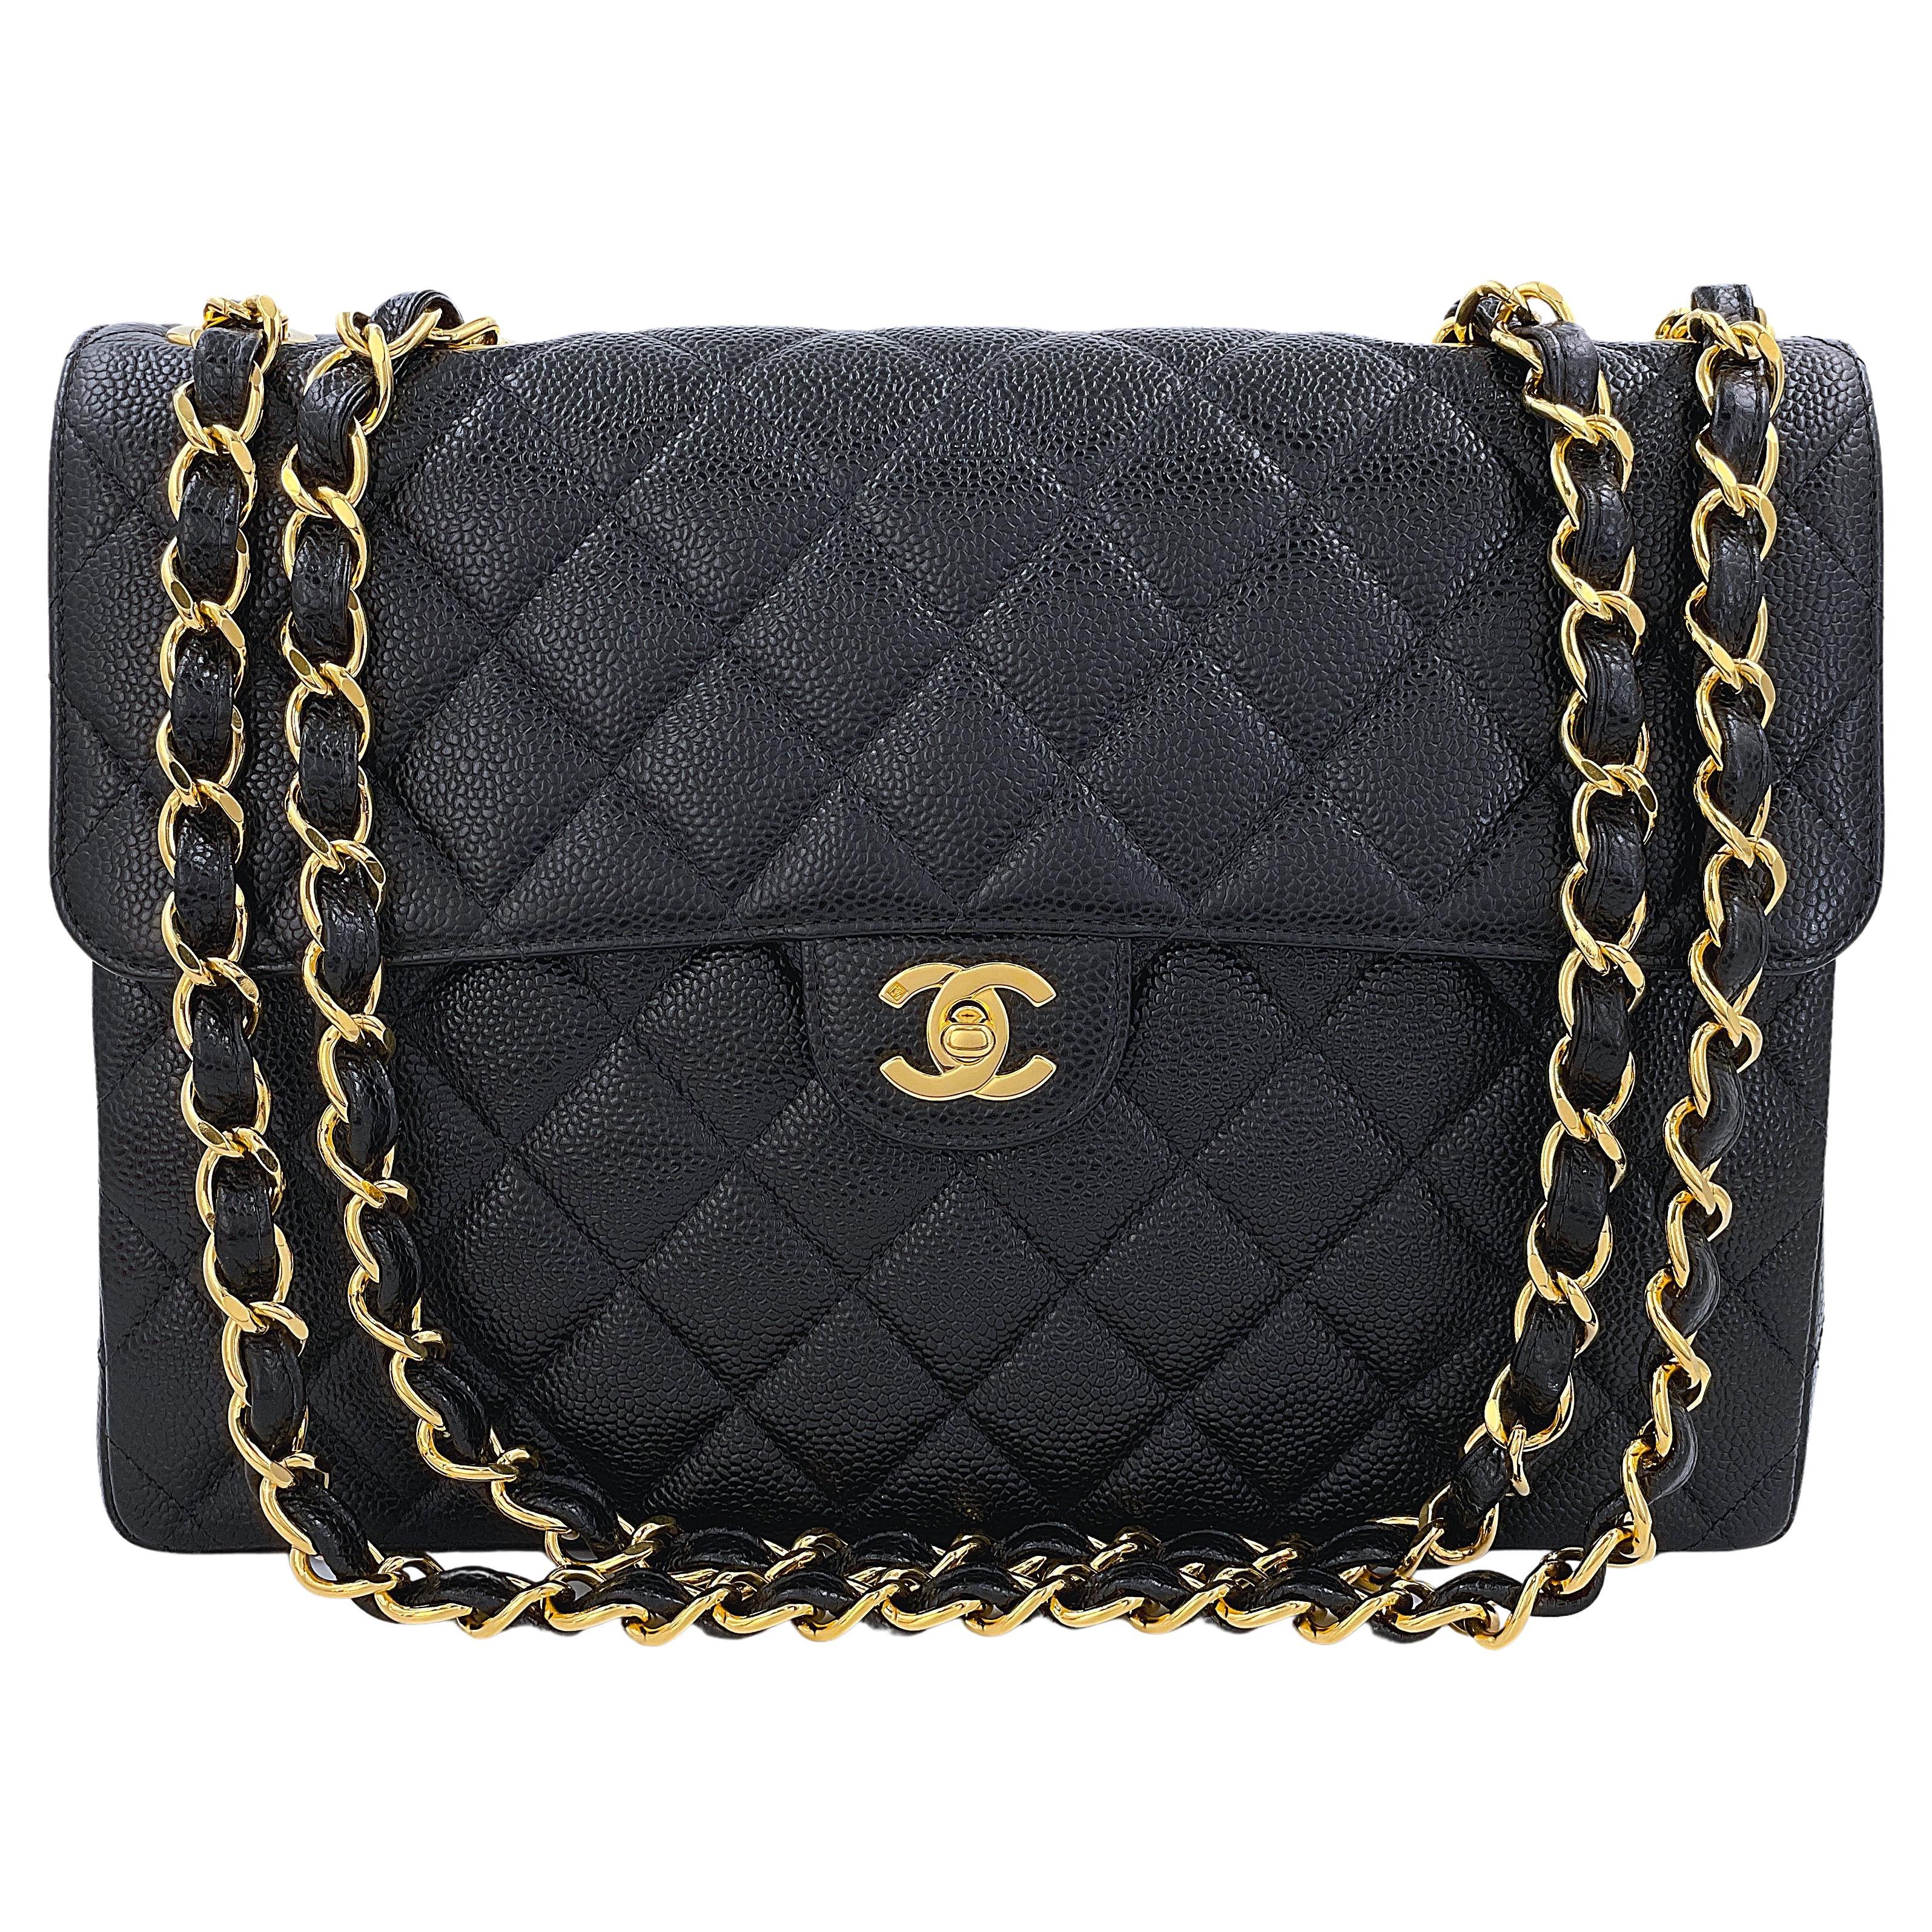 Pristine Chanel 2002 Vintage Black Caviar Jumbo Classic Flap Bag 24k GHW 67313 For Sale